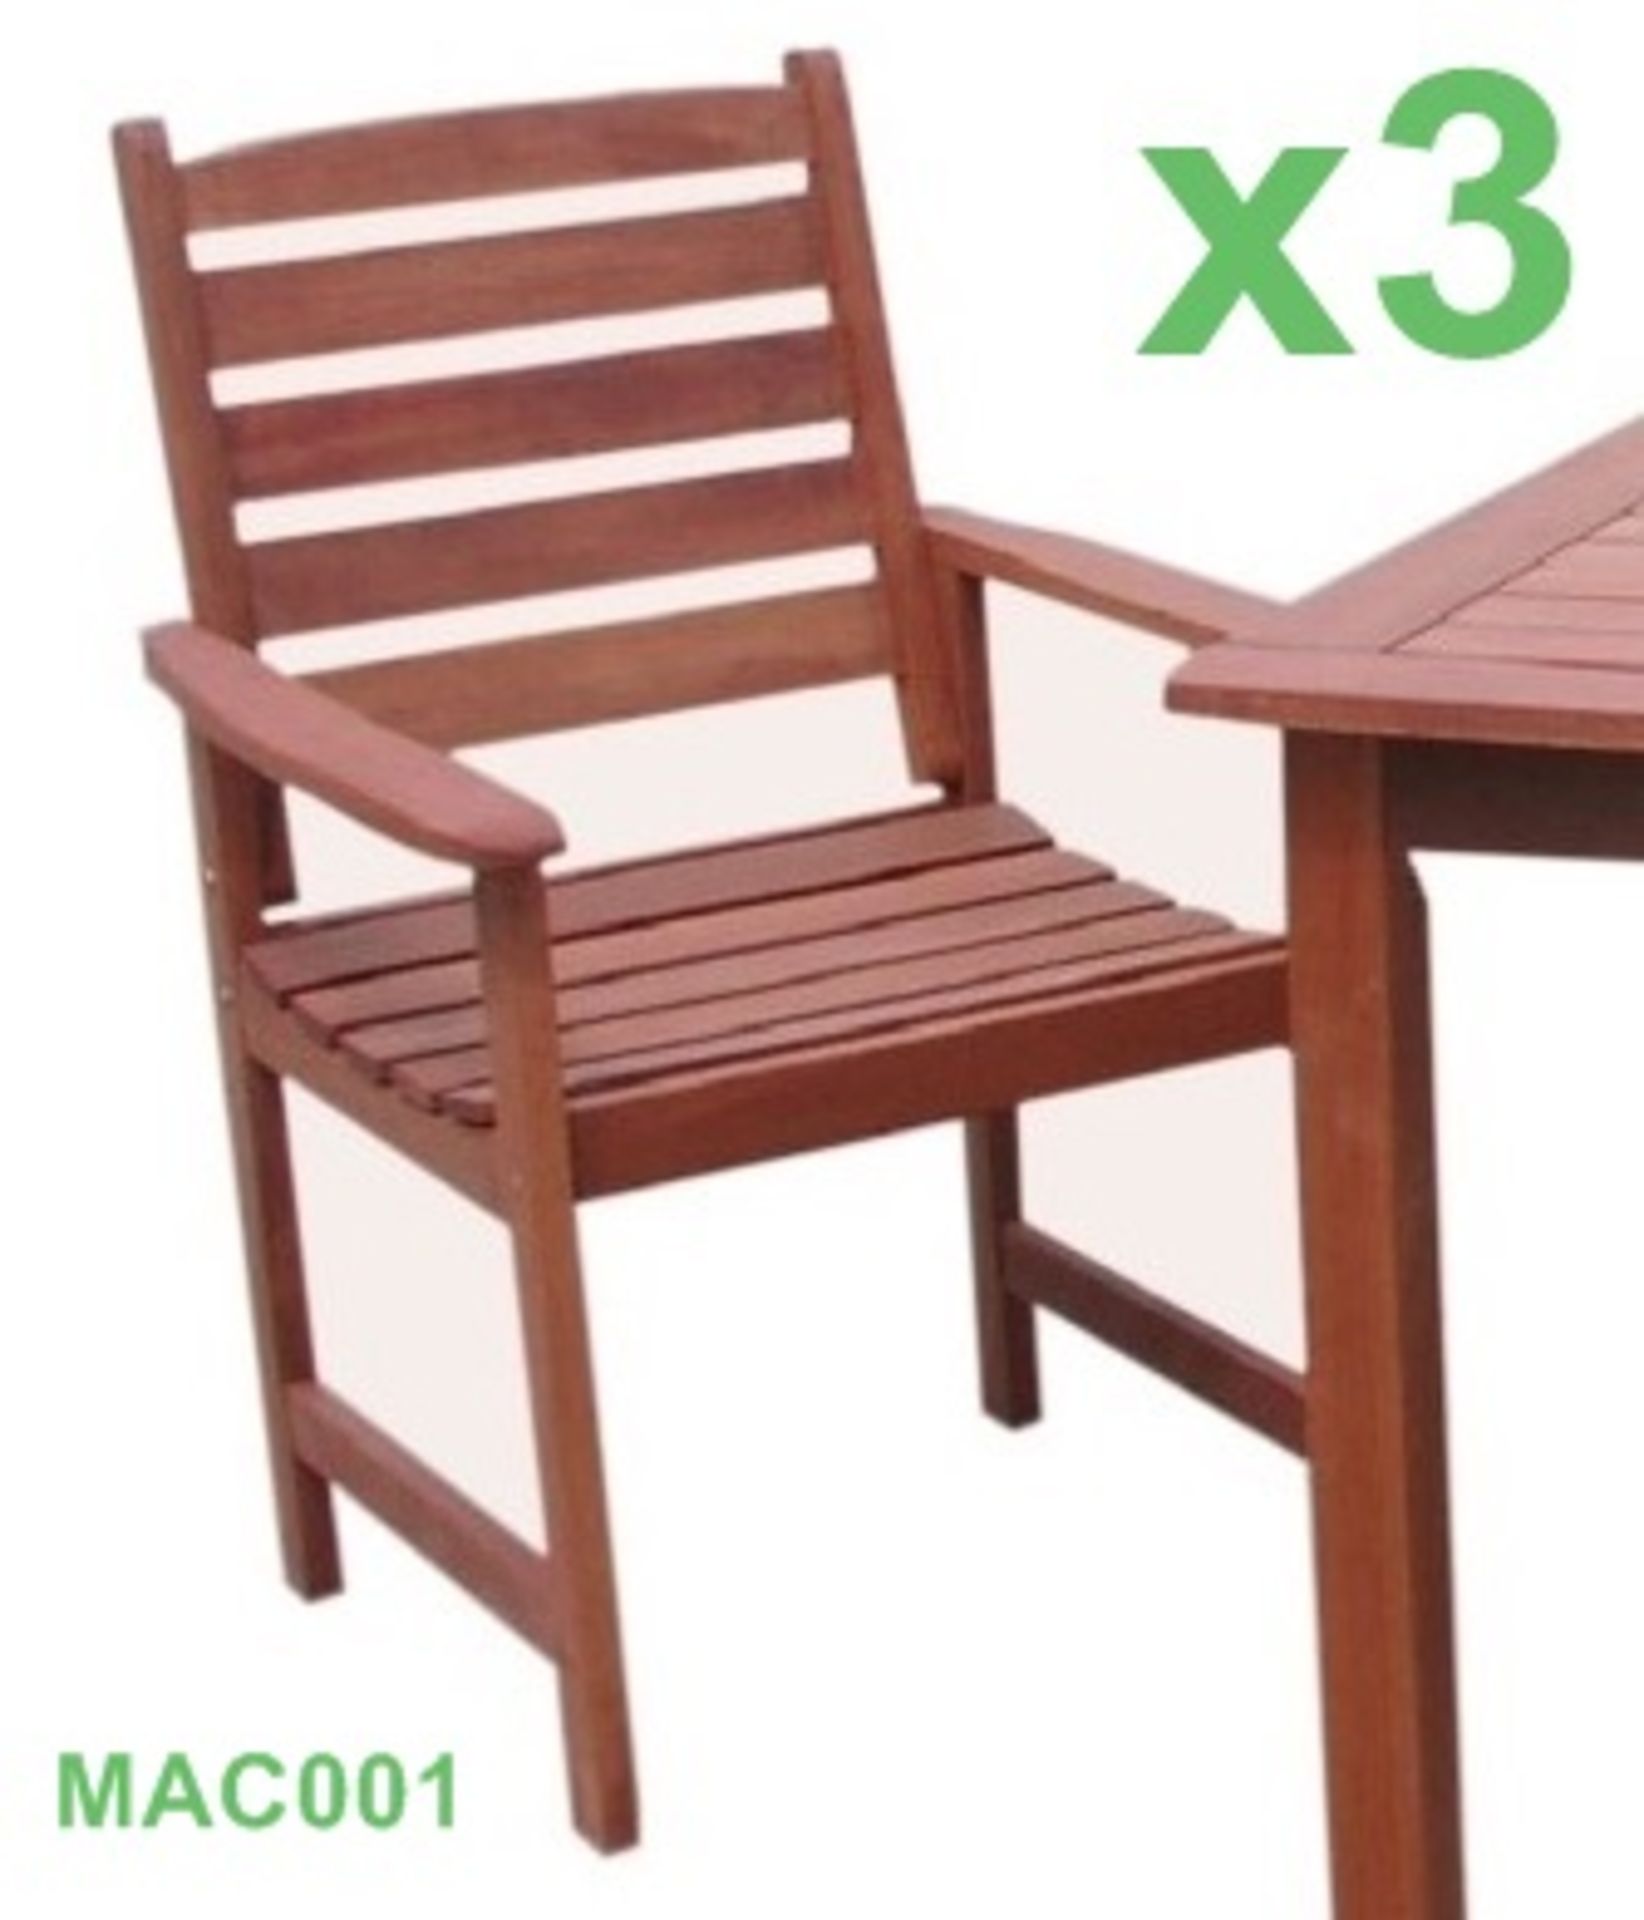 1 x 3-Piece "Macau Nassau" Garden Furniture Set - Includes Bench, Extending Table & 3 x Arm Chairs - - Image 4 of 4